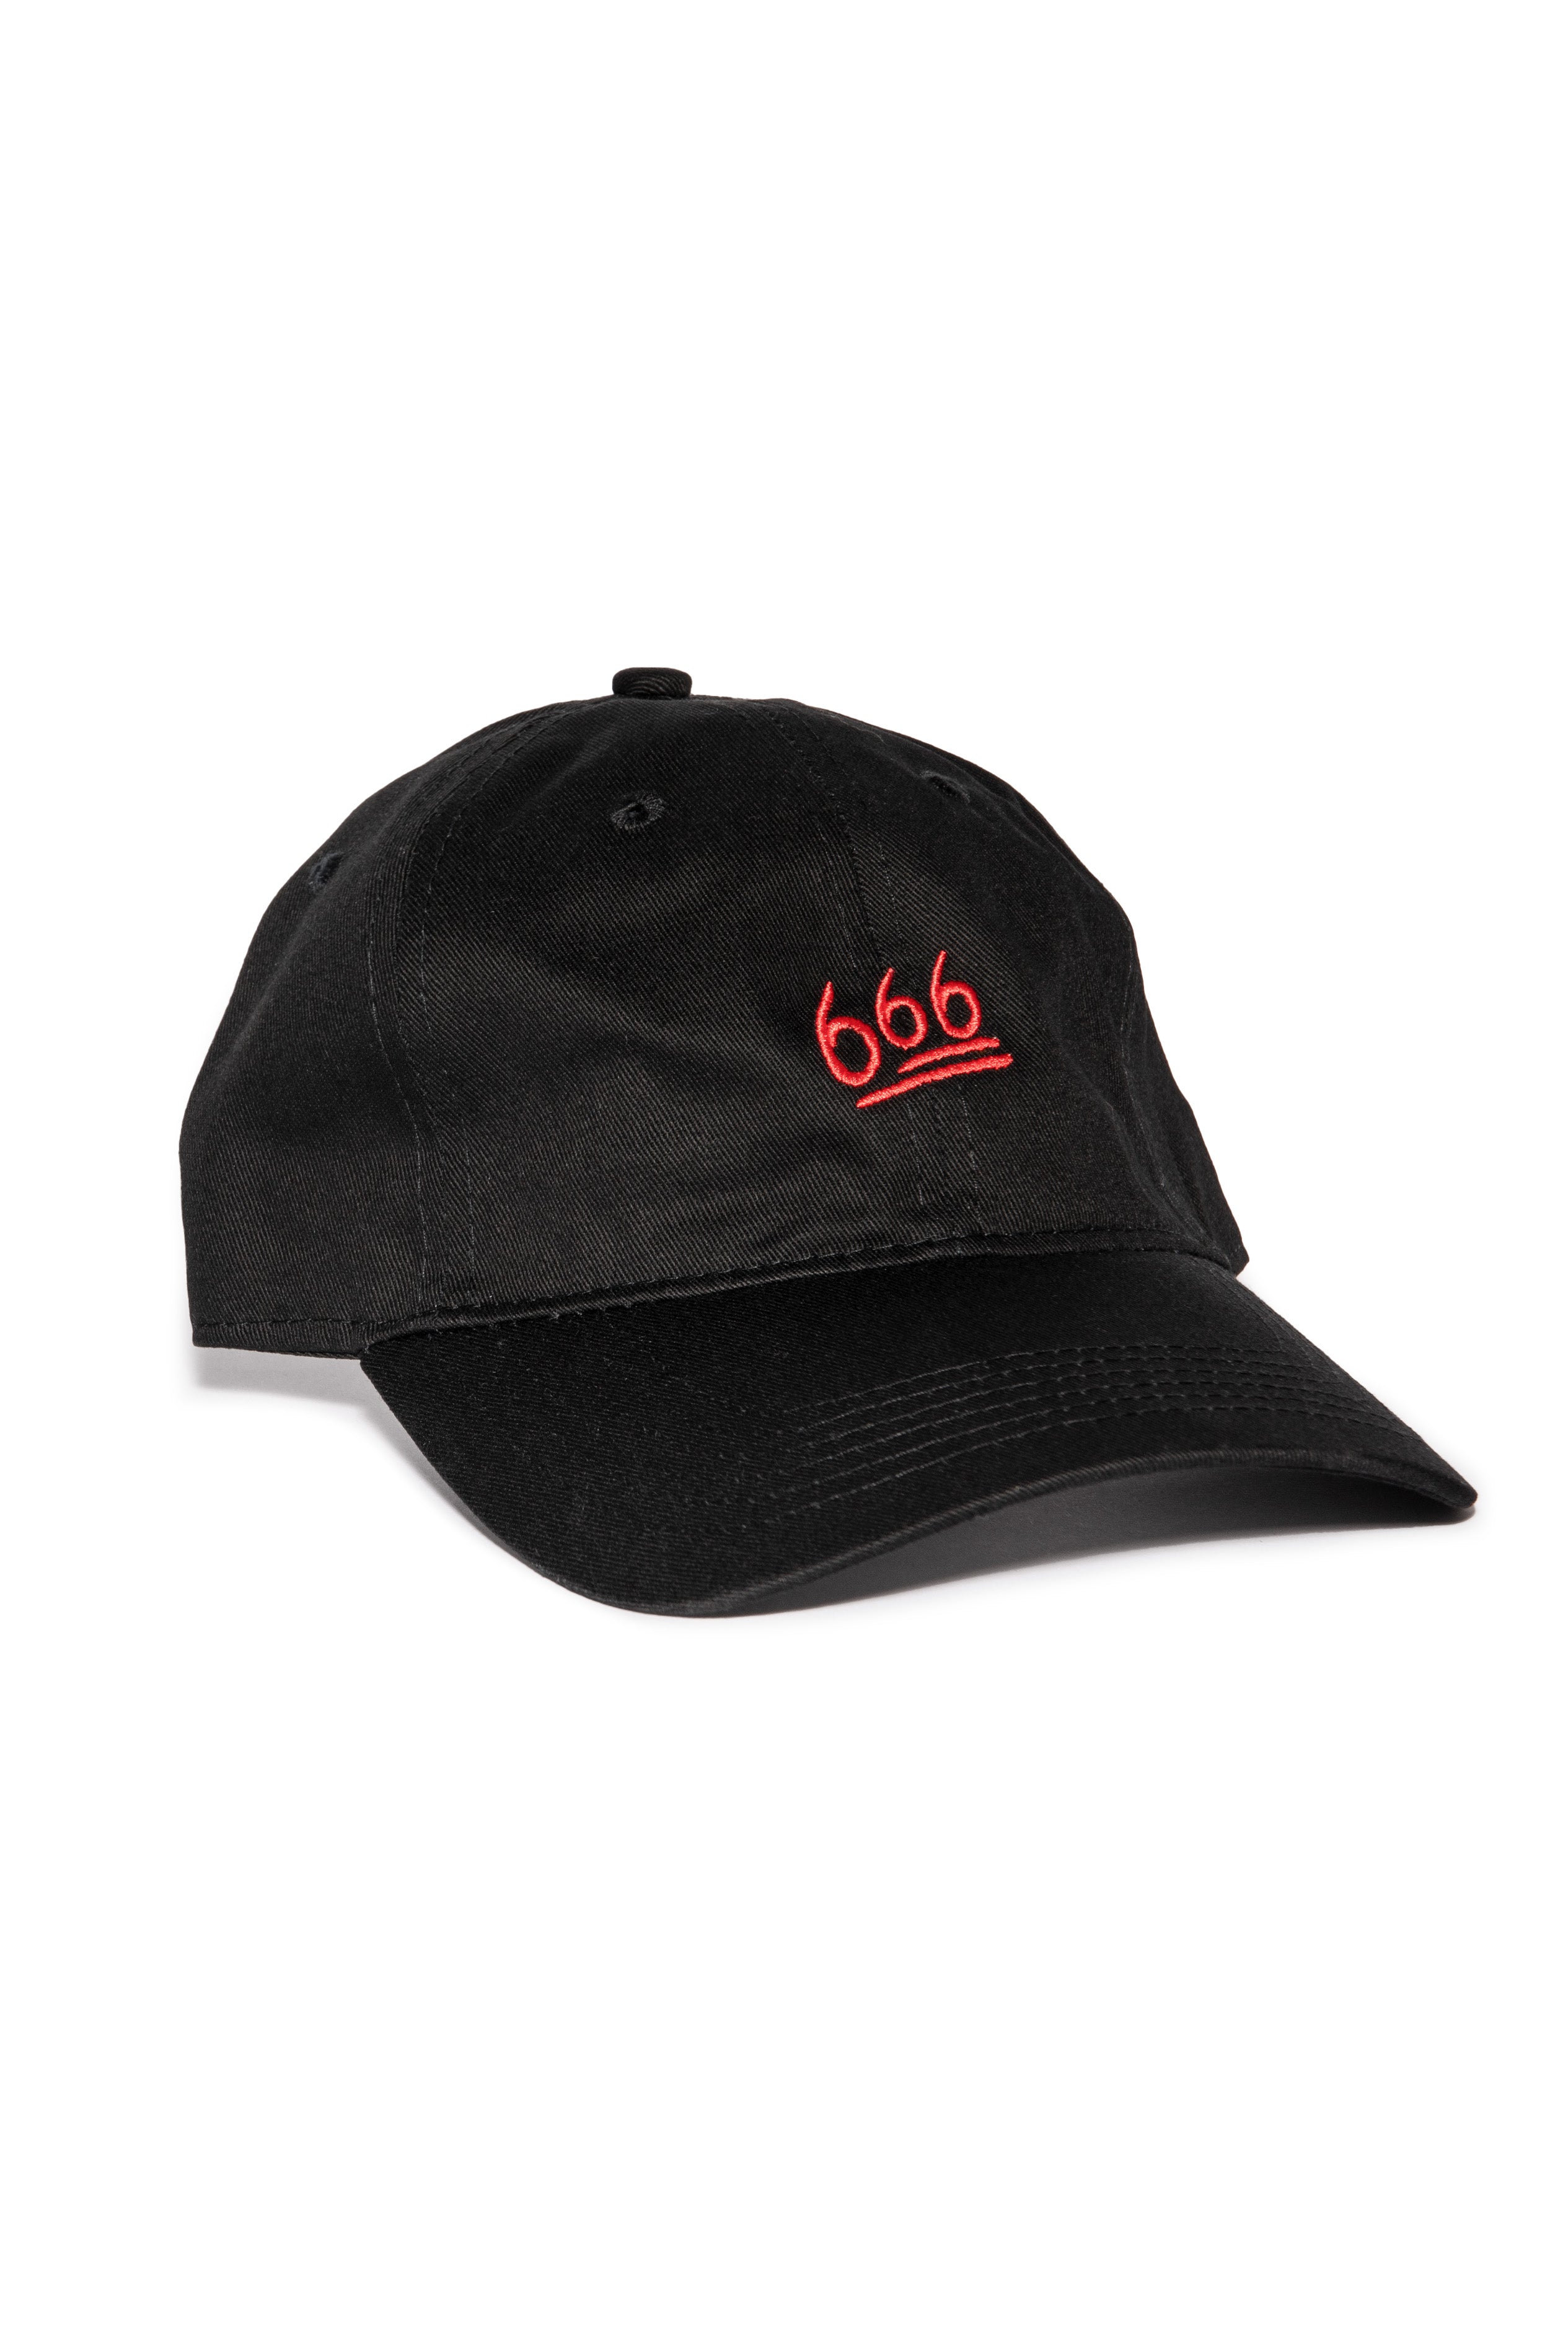 Keep It 666 - Dad Hat – Blackcraft Cult